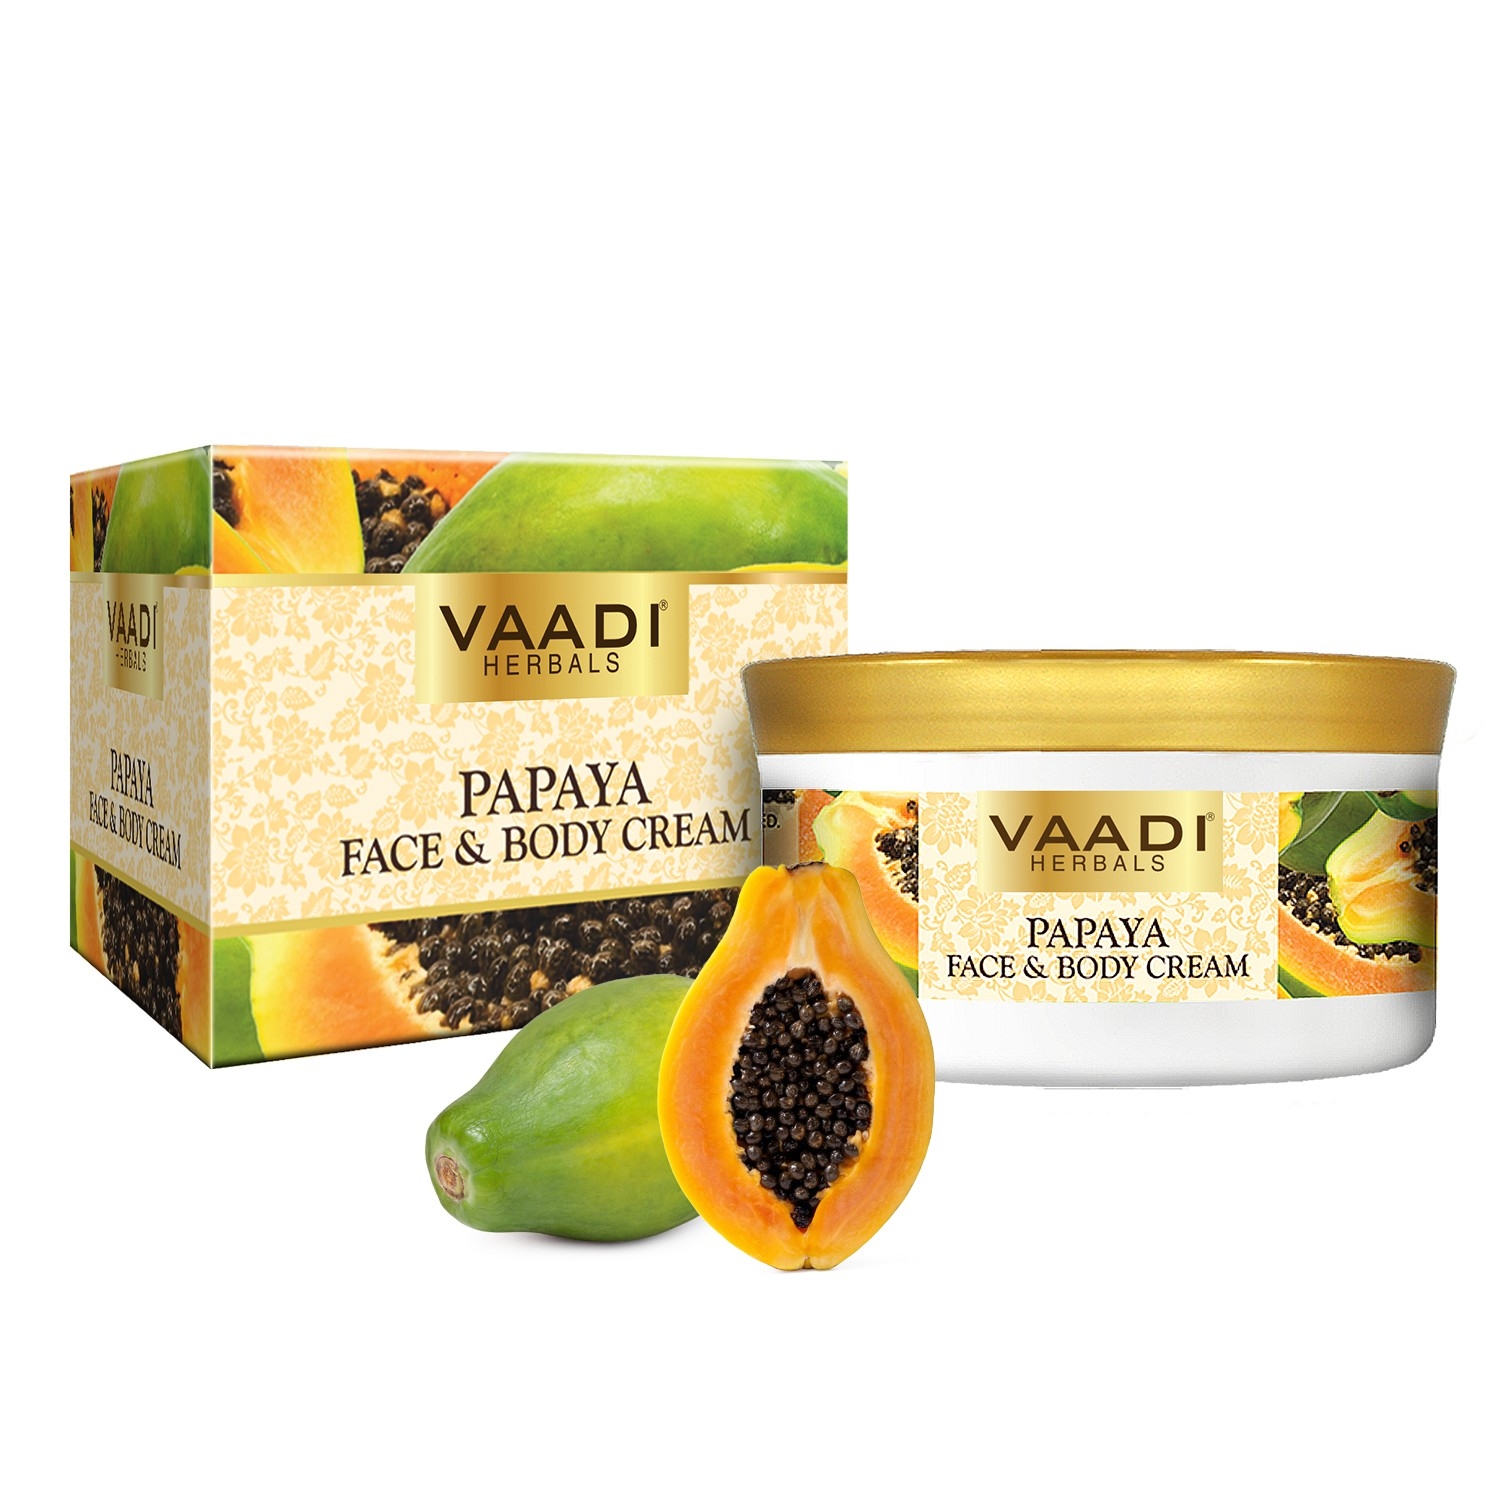 Vaadi Herbals | Vaadi Herbals Papaya Face & Body Cream (150g)